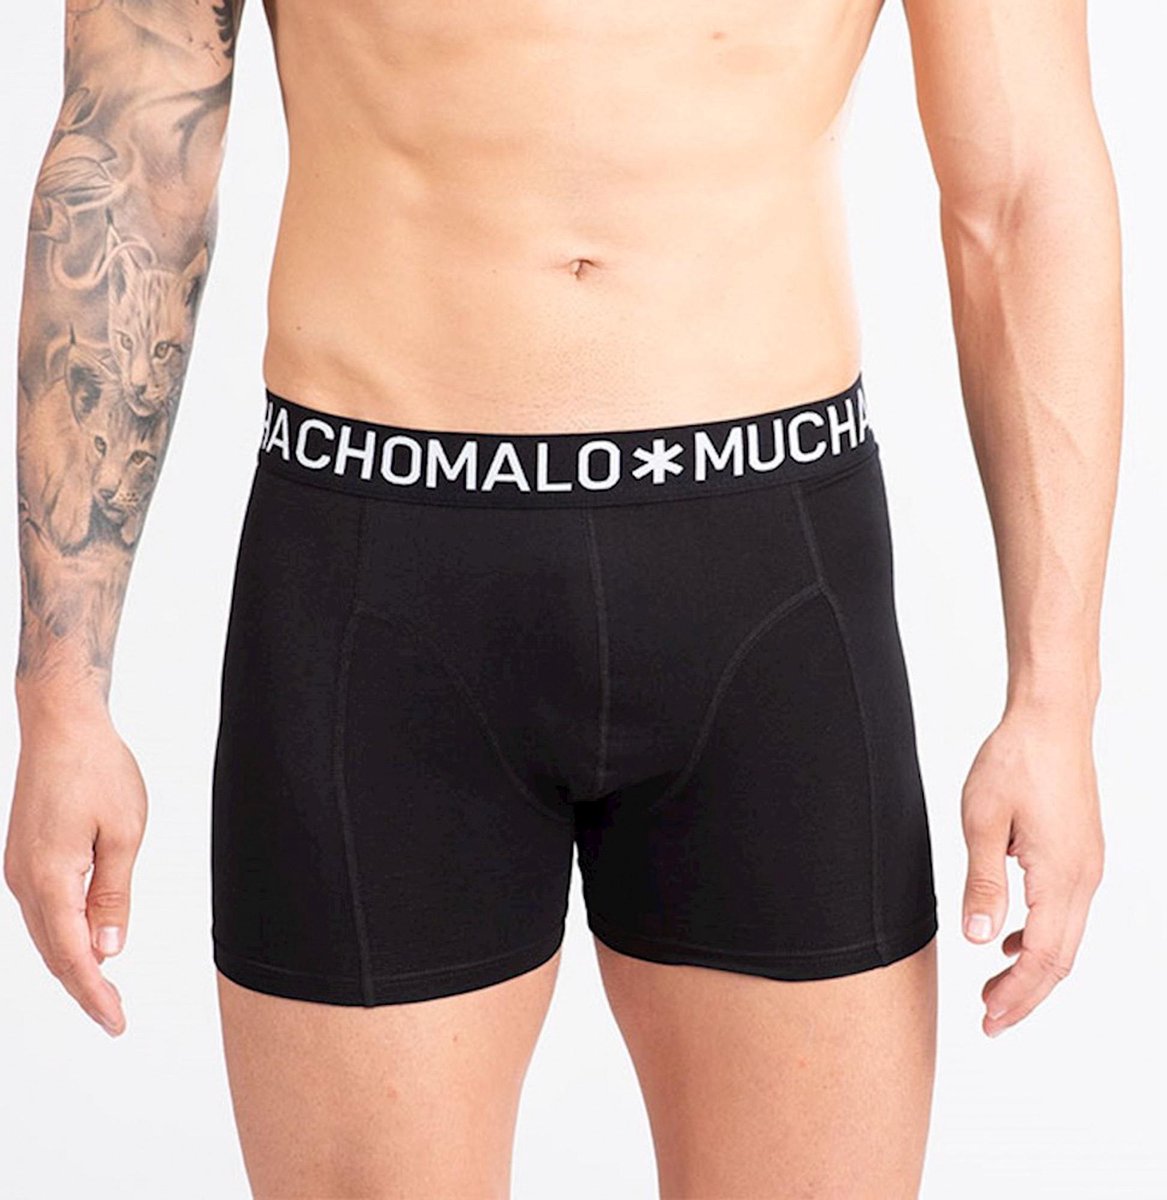 Muchachomalo 5-pack hello sunshine Solide Homme Boxer Culotte Noir/Multi 